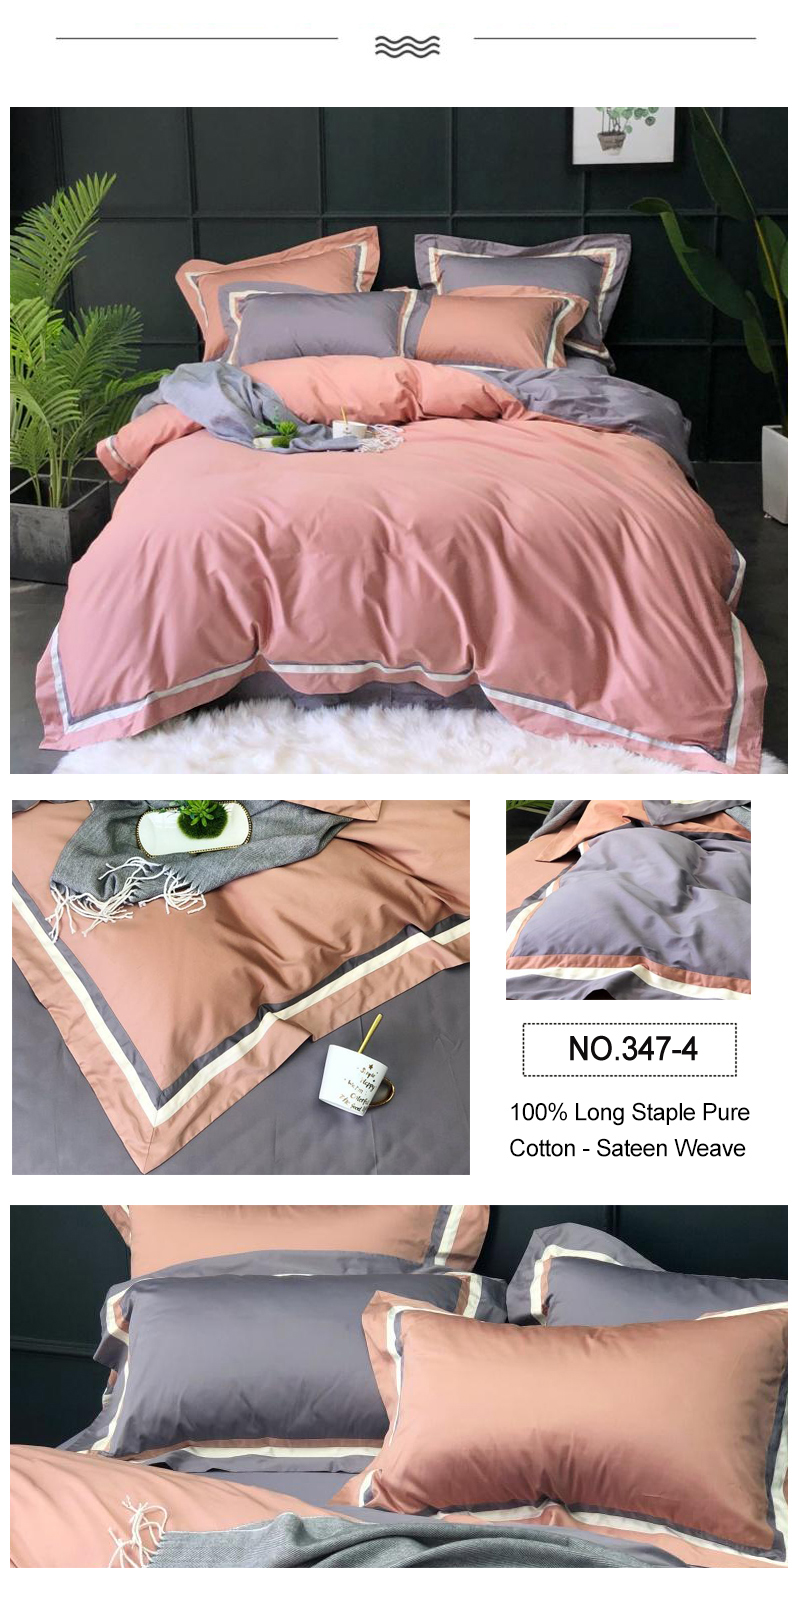 100% Long Staple Cotton Bedding Highest Quality